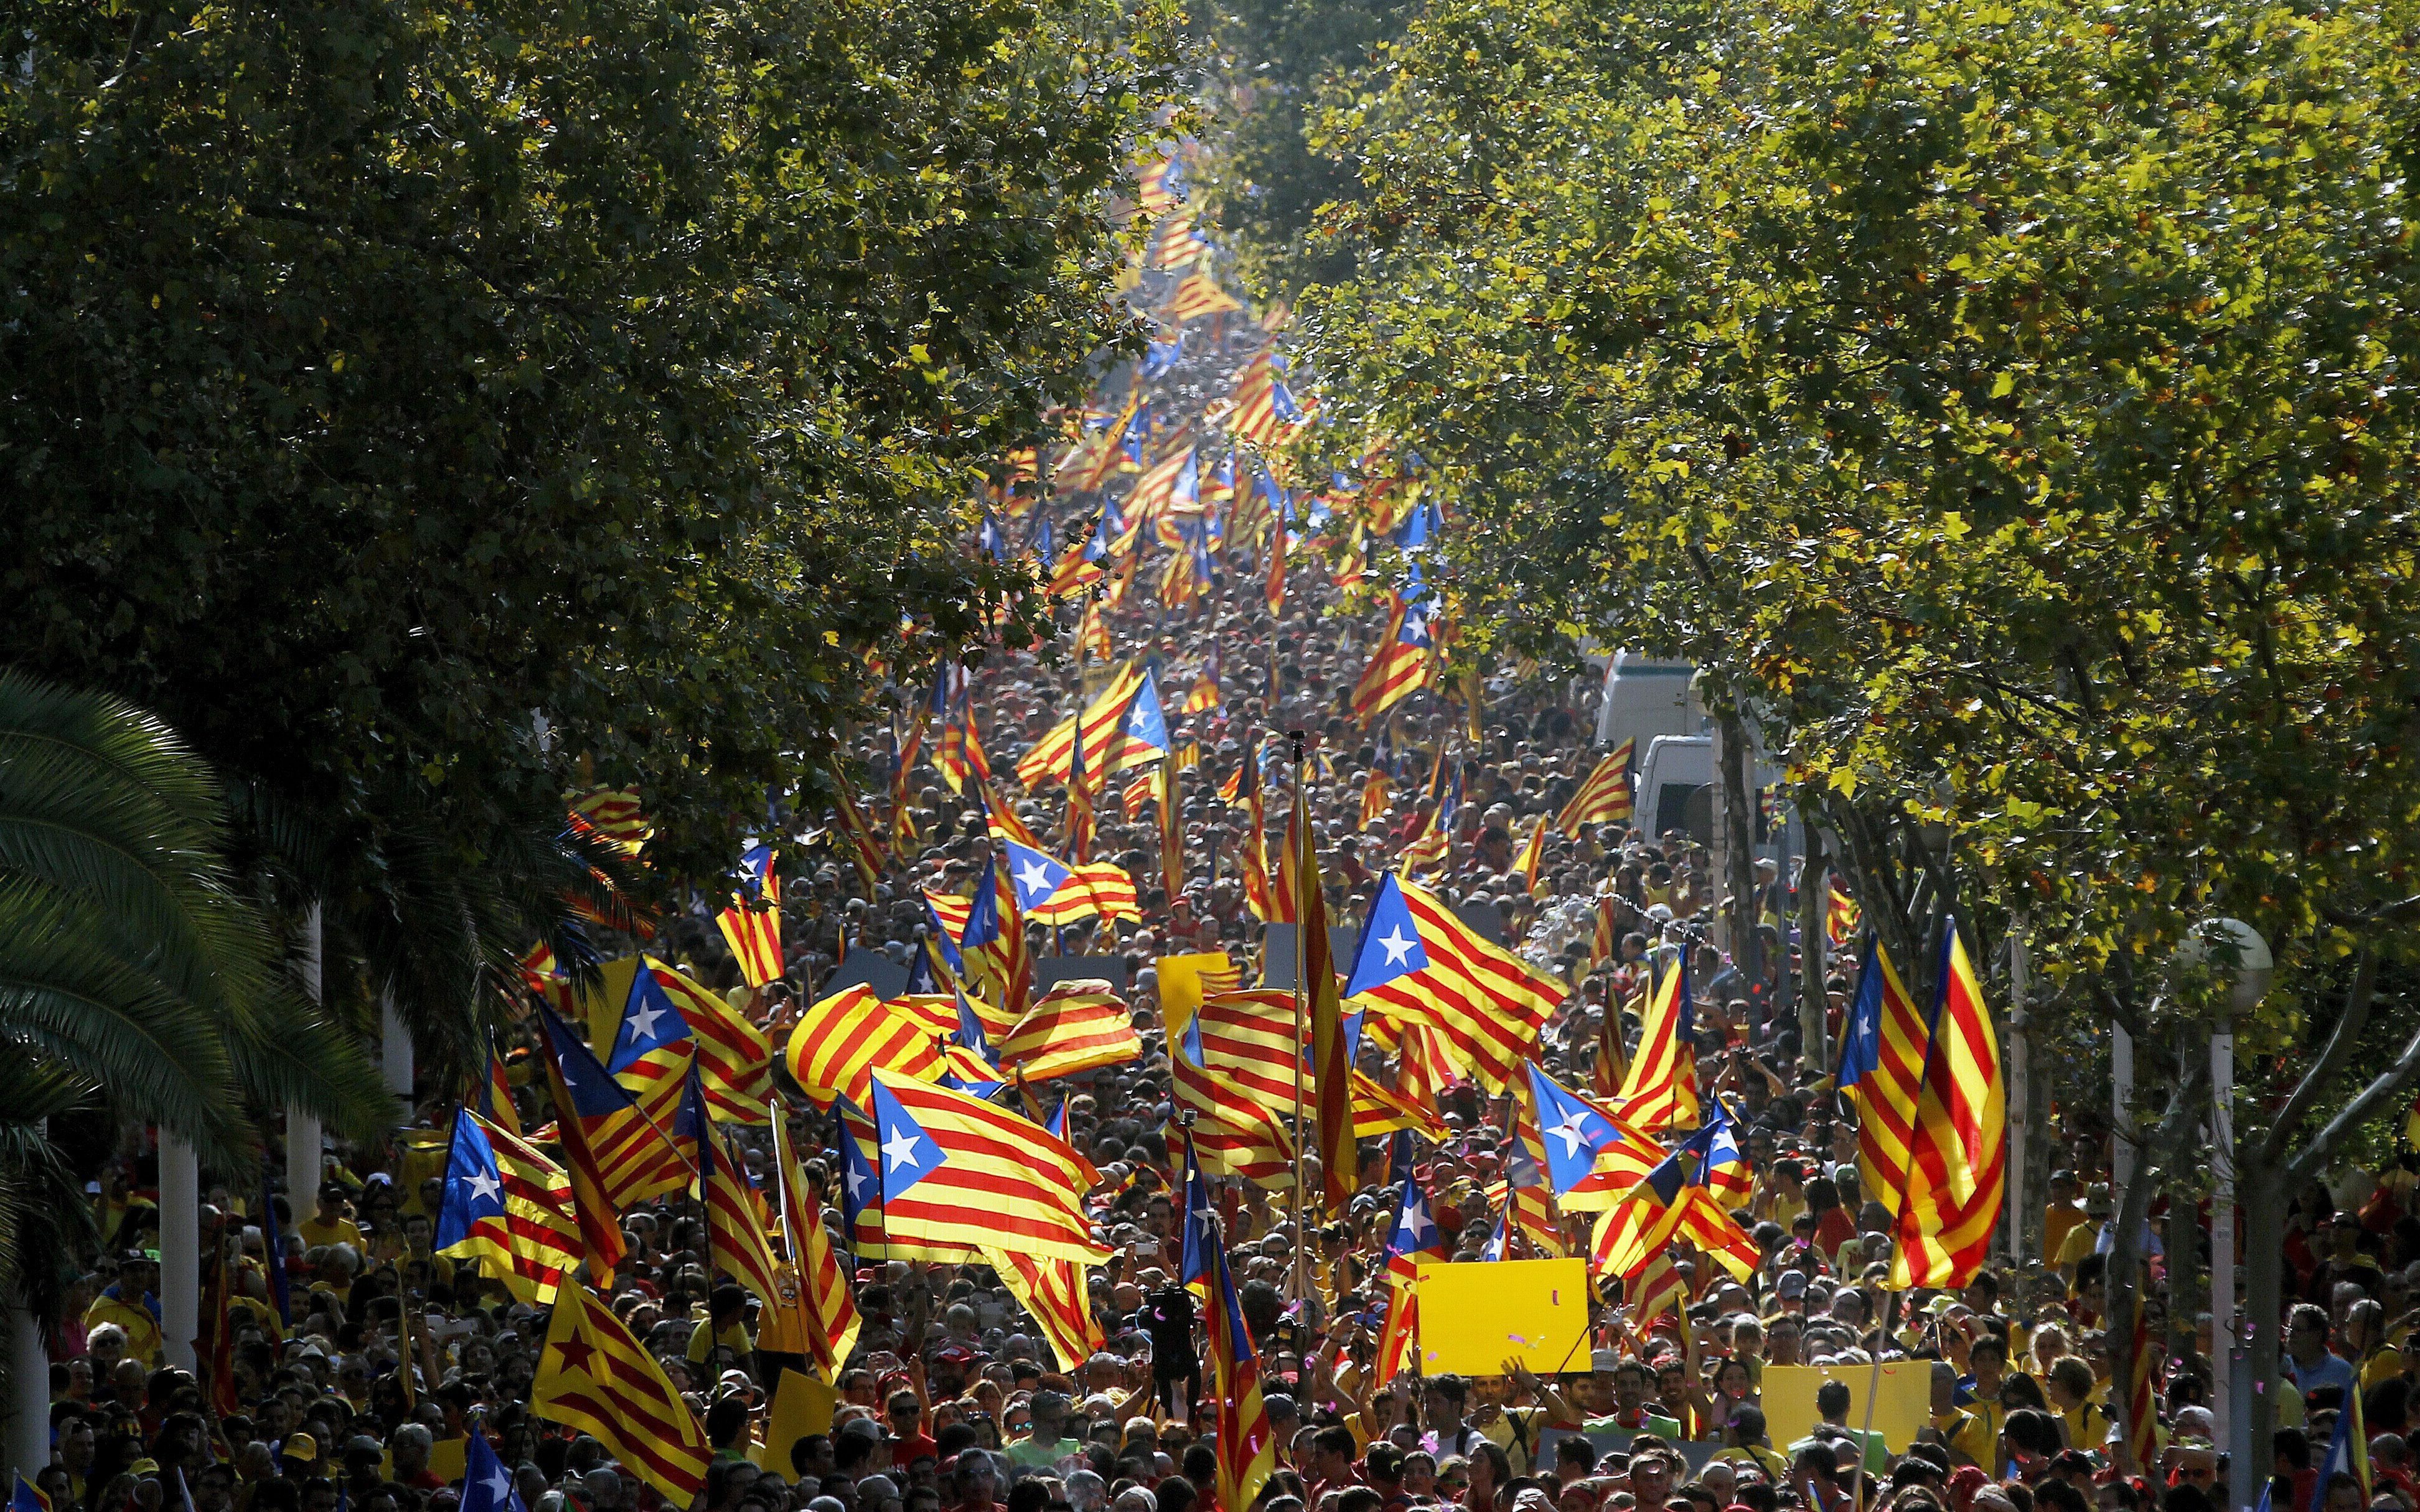 Oι Καταλανοί ζητούν ανεξαρτητοποίηση από την Ισπανία